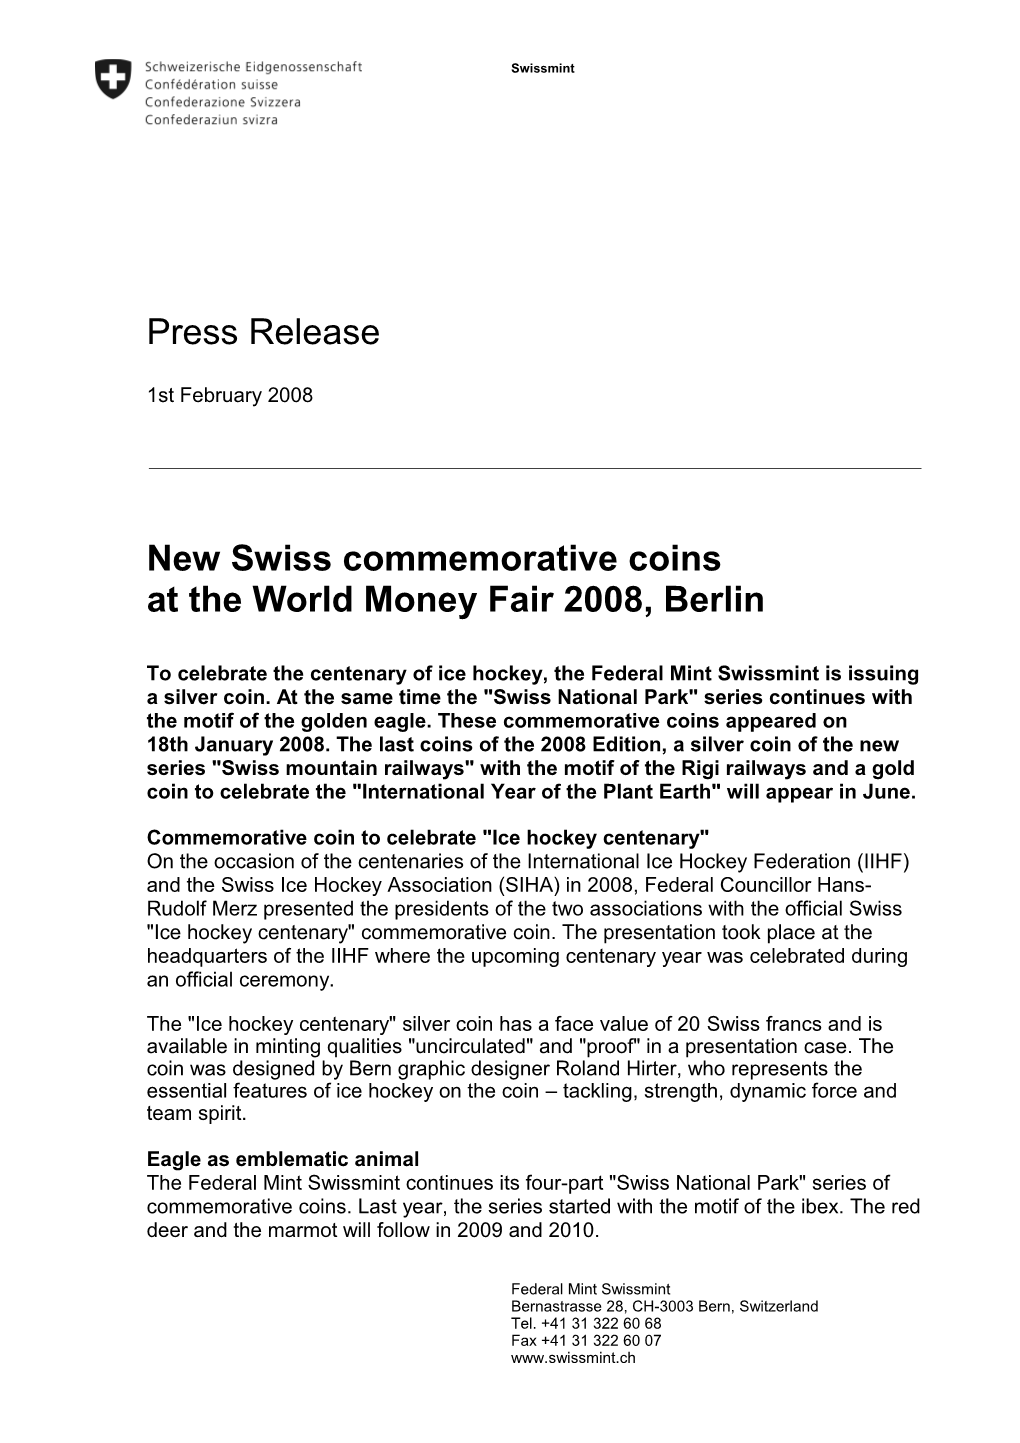 New Swiss Commemorative Coins at the World Money Fair 2008, Berlin